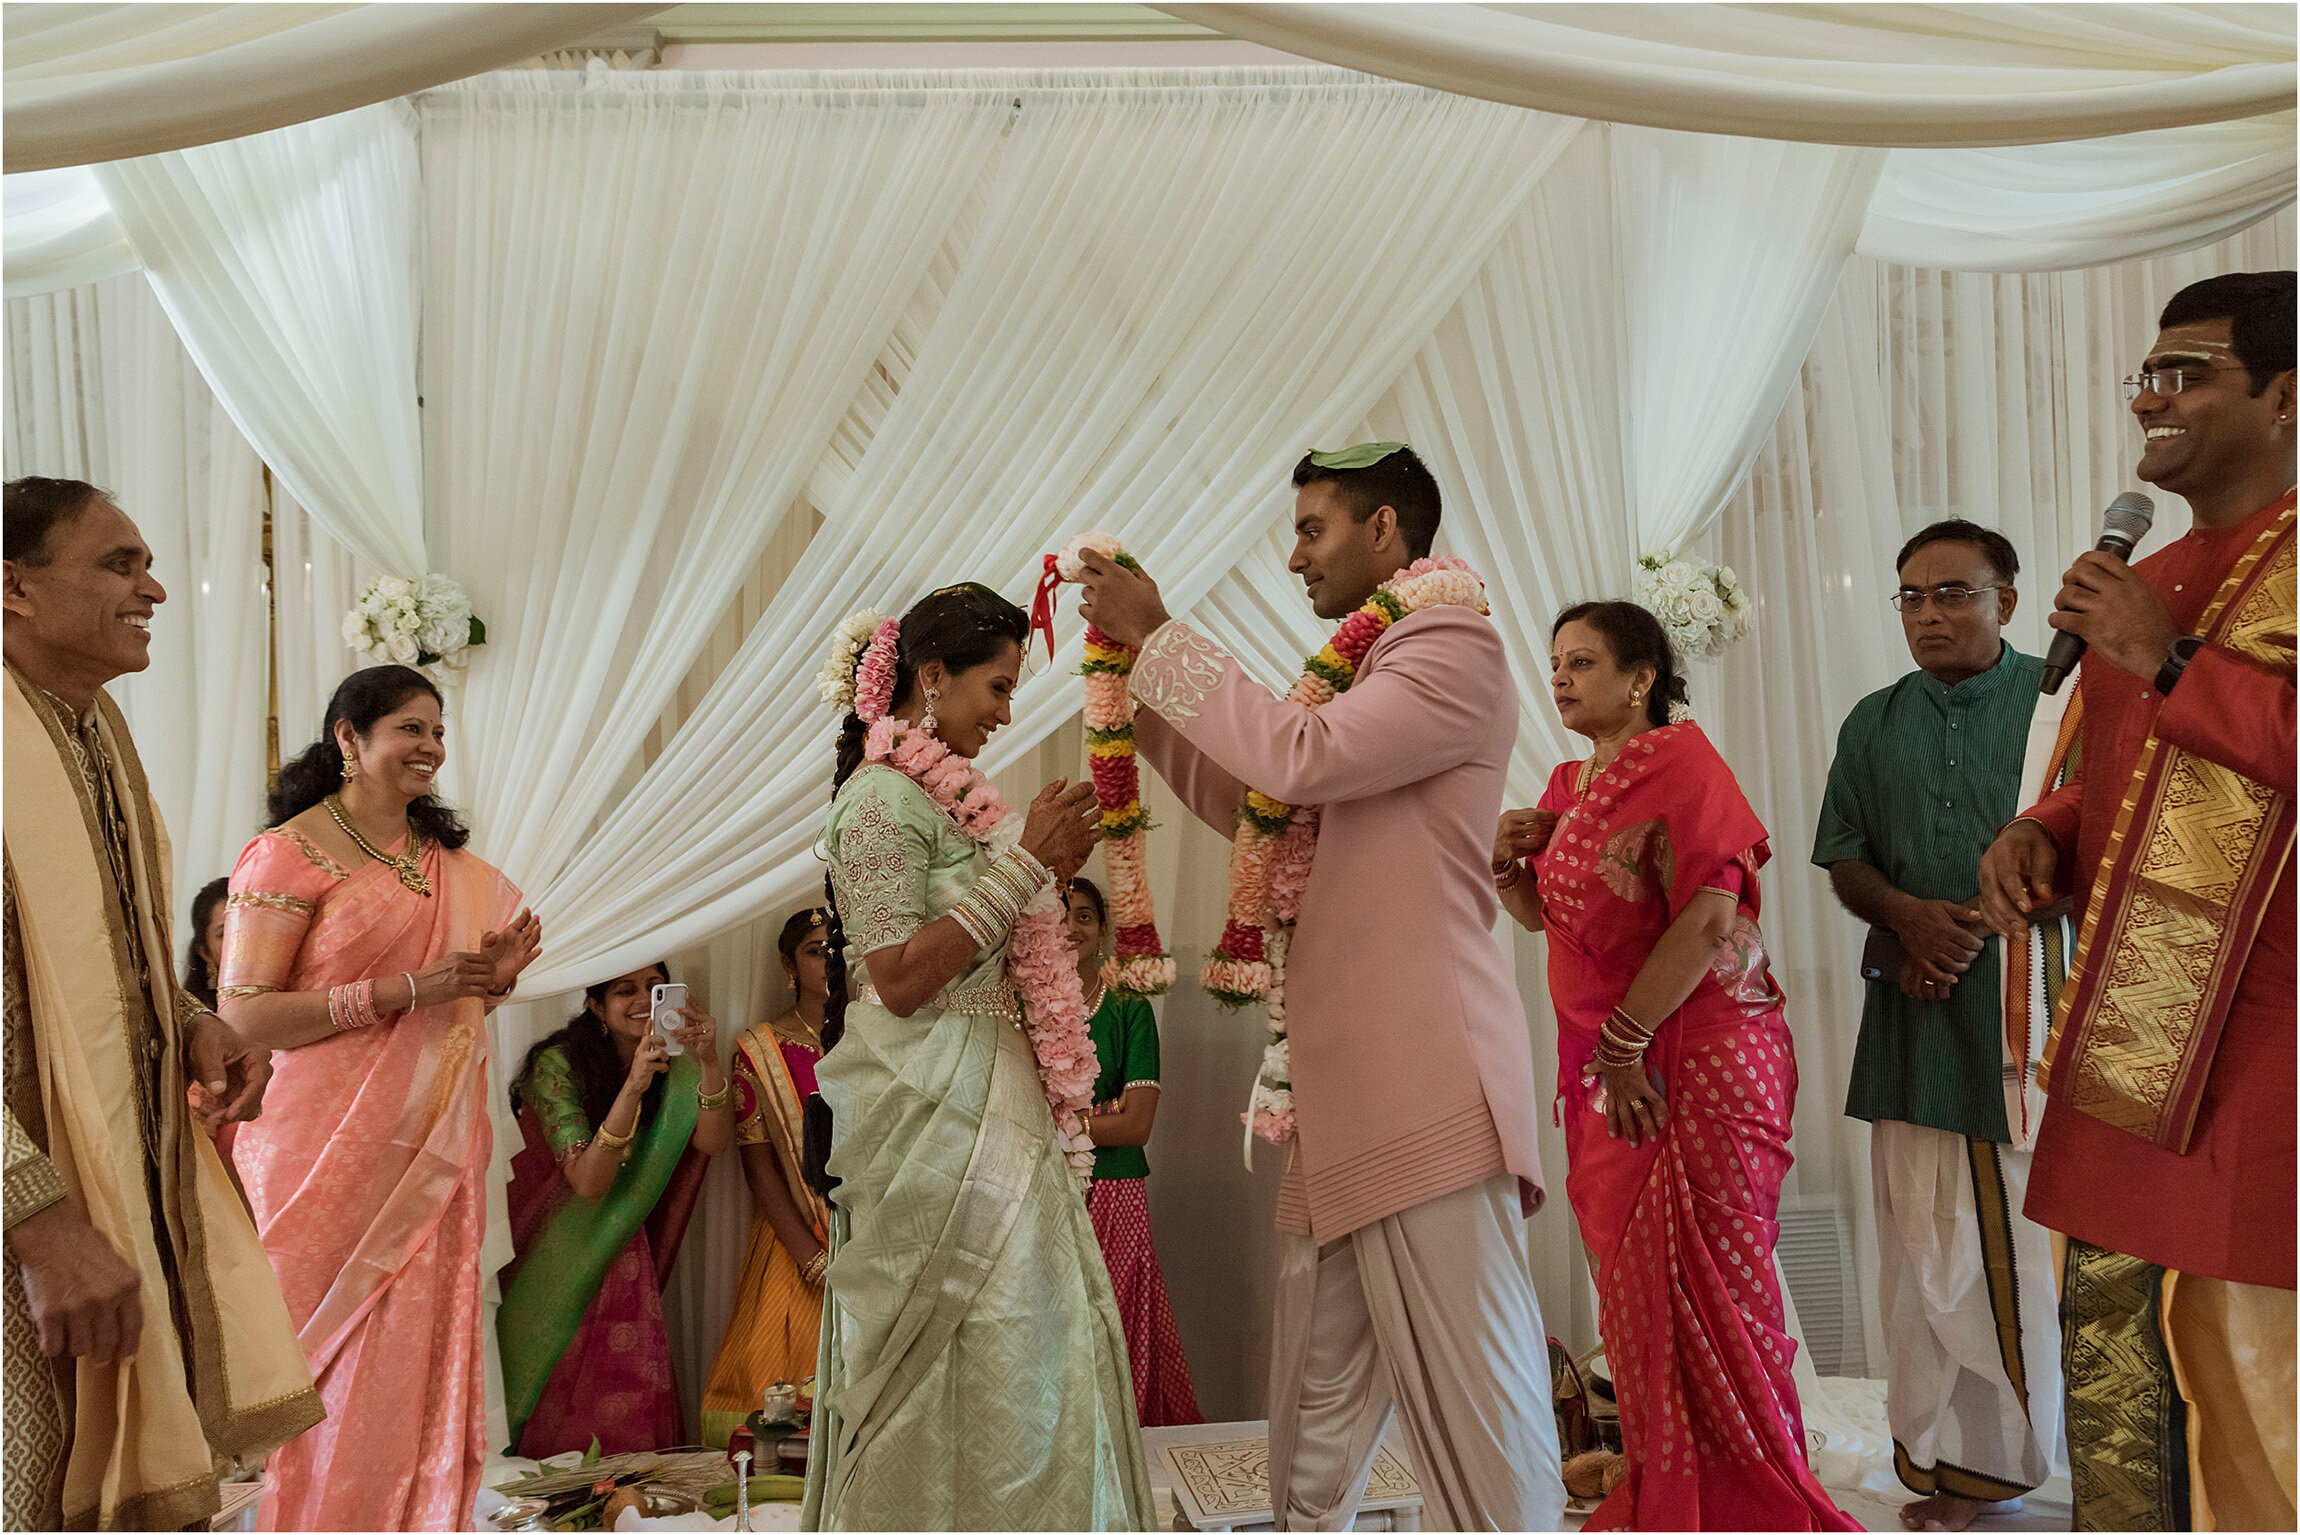 ©FianderFoto_Hindu Wedding_Bermuda_009 (1).jpg